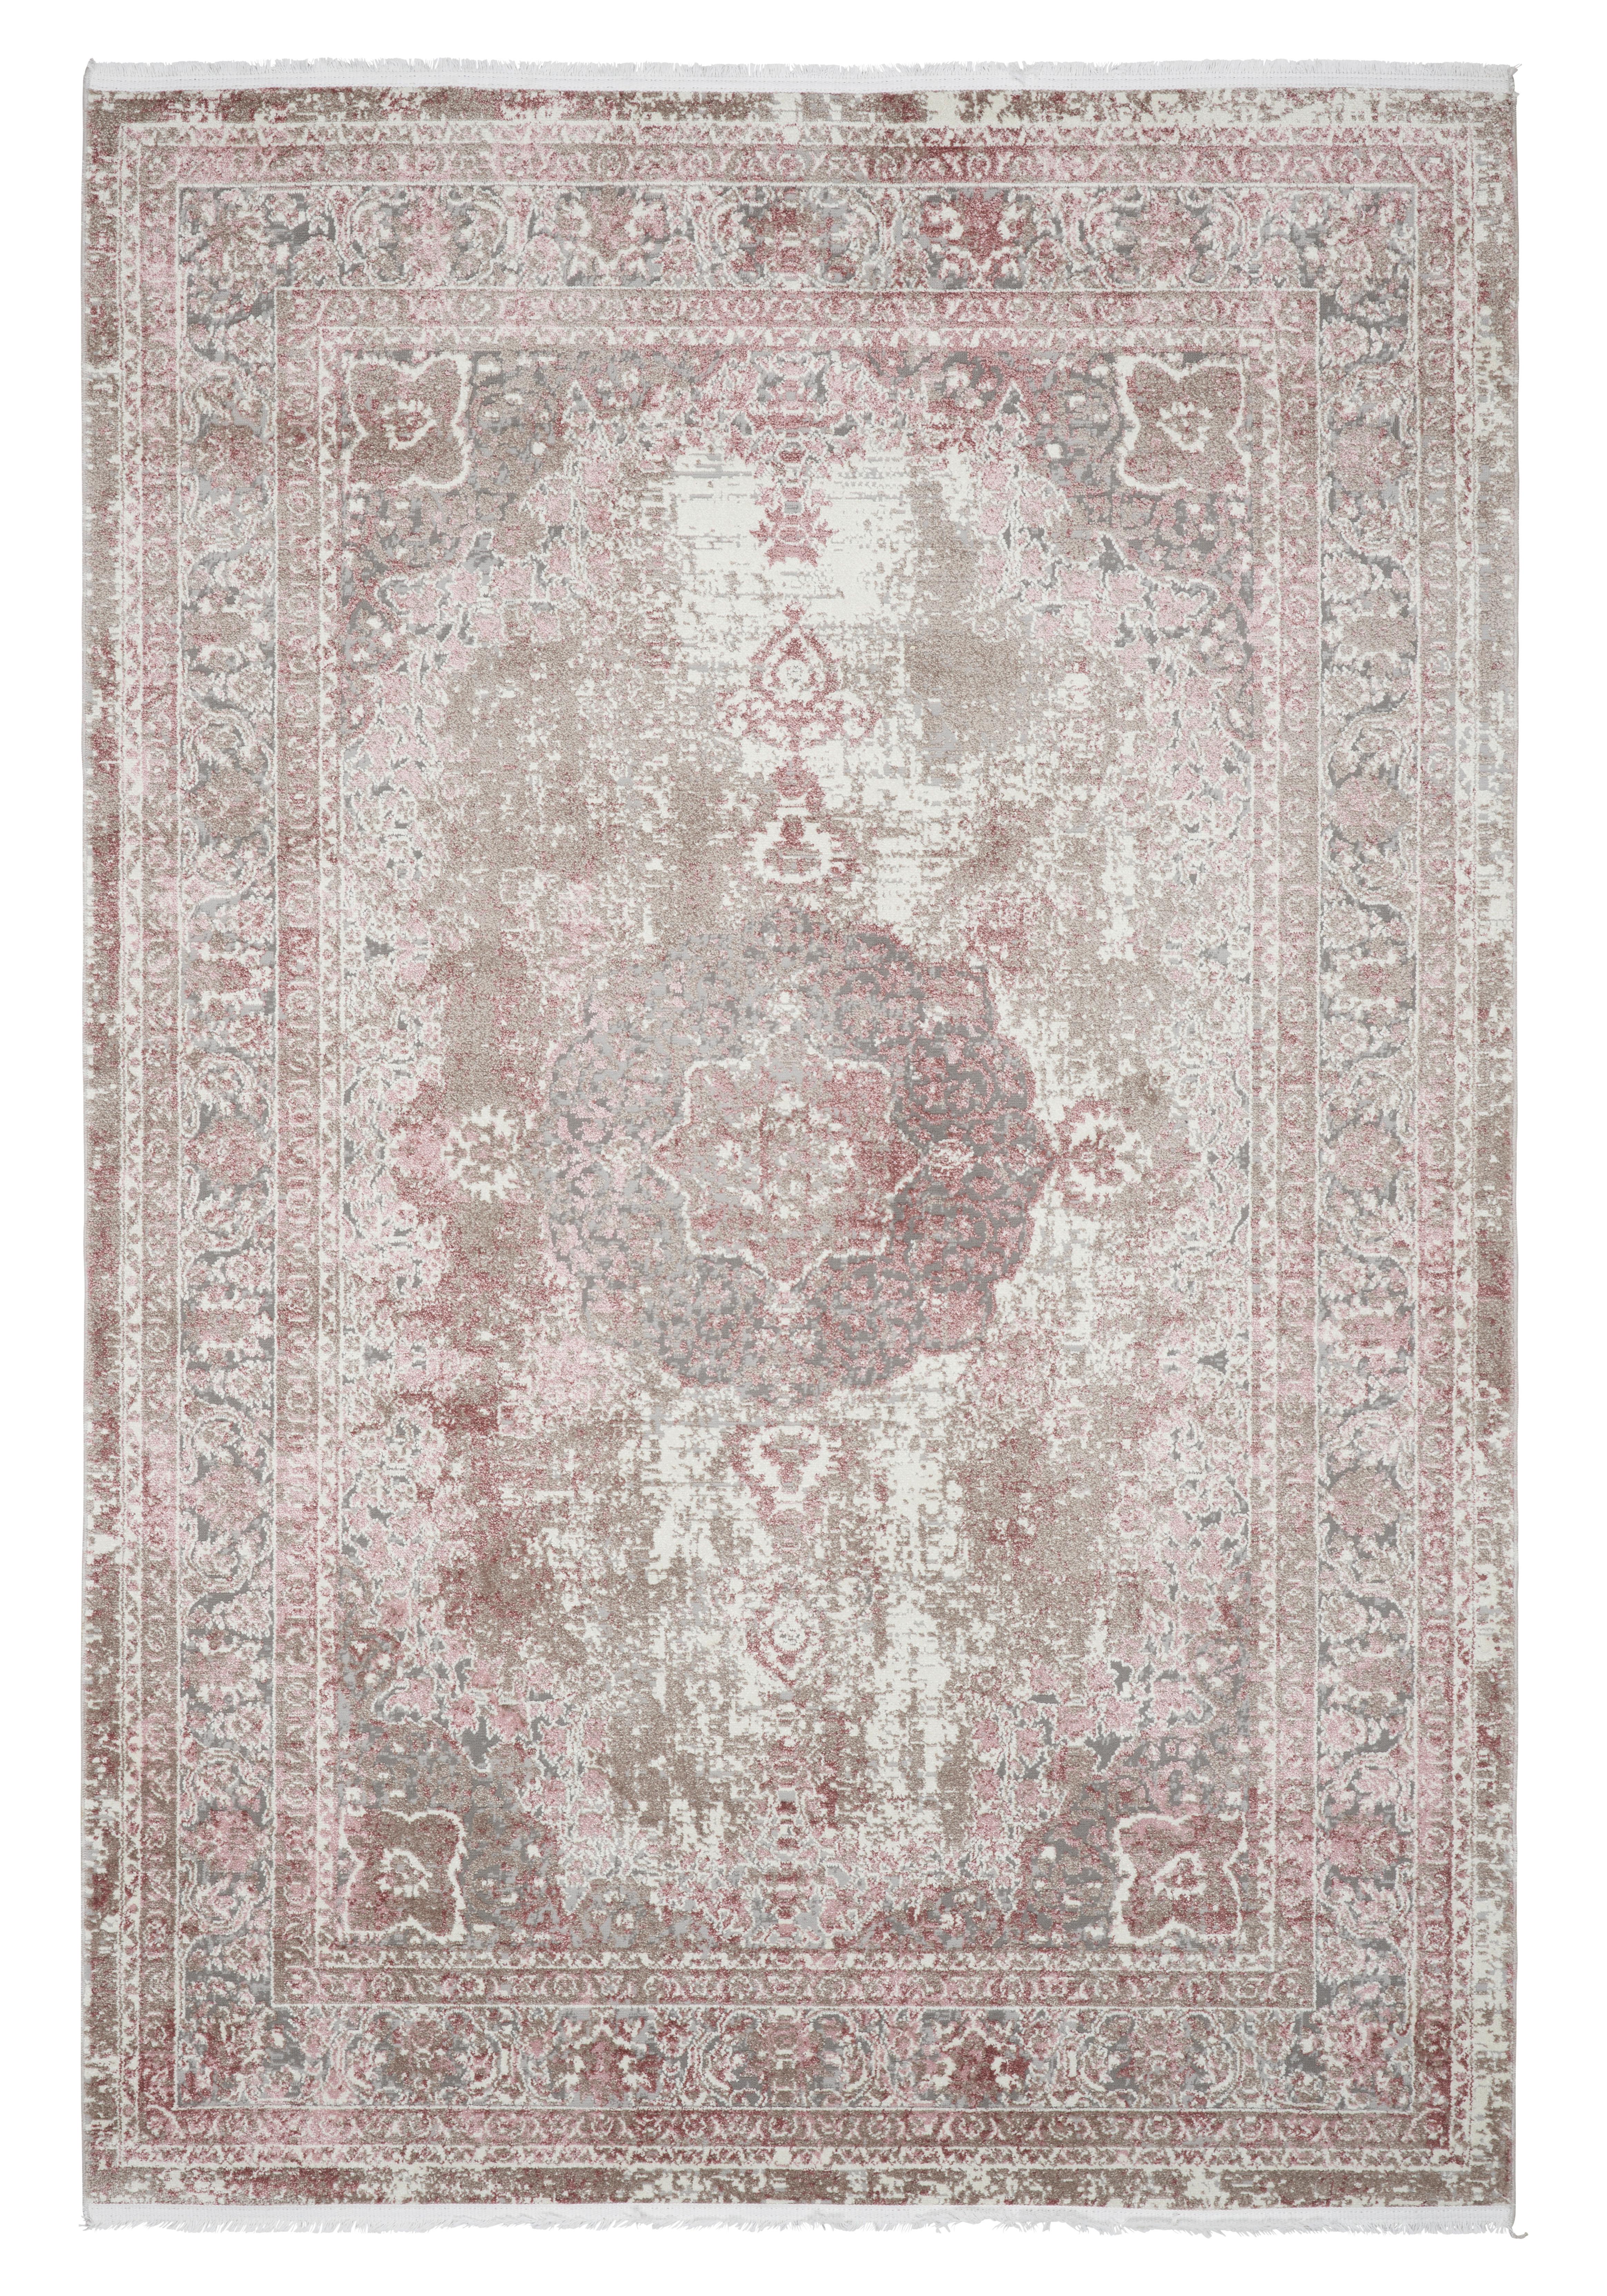 Tkaný Koberec Marcus 2, 120/170cm, Ružová - ružová, textil (120/170cm) - Modern Living